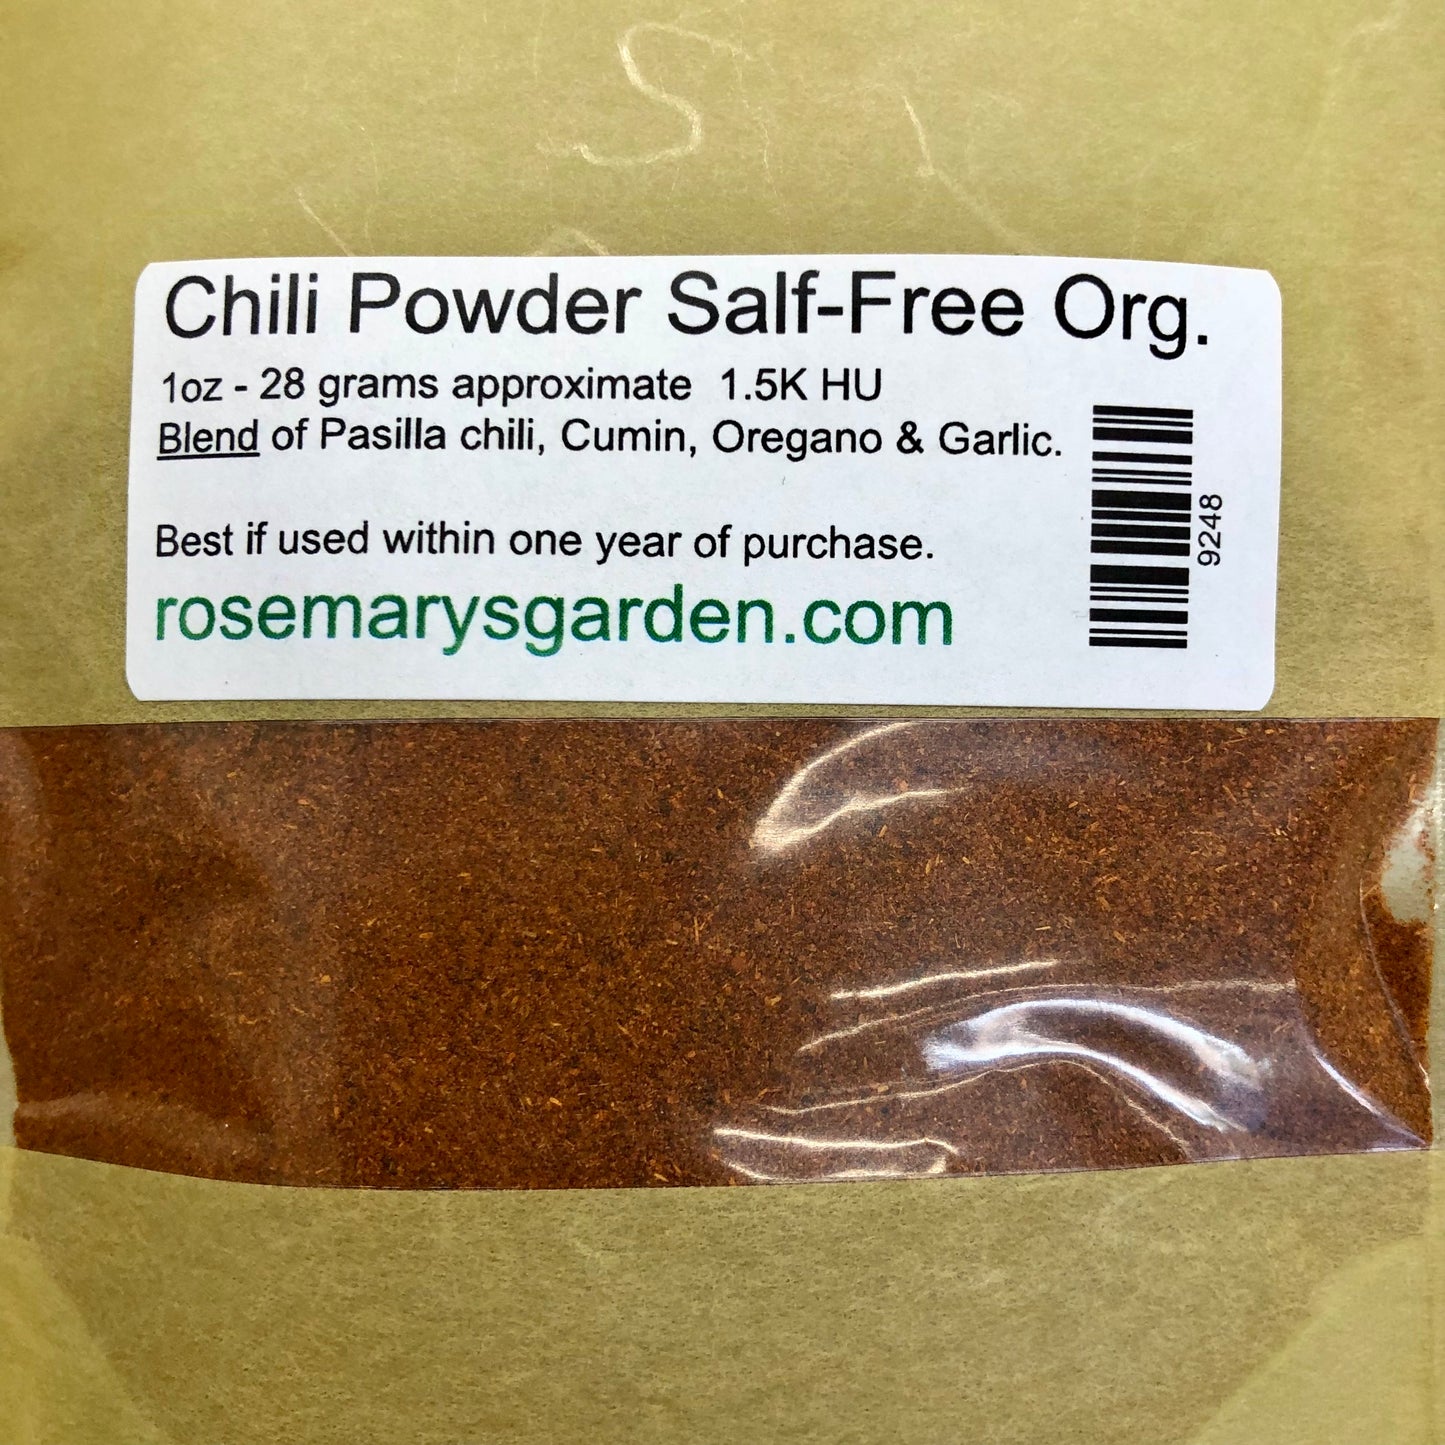 Chili Powder Salt-free Organic by the oz.